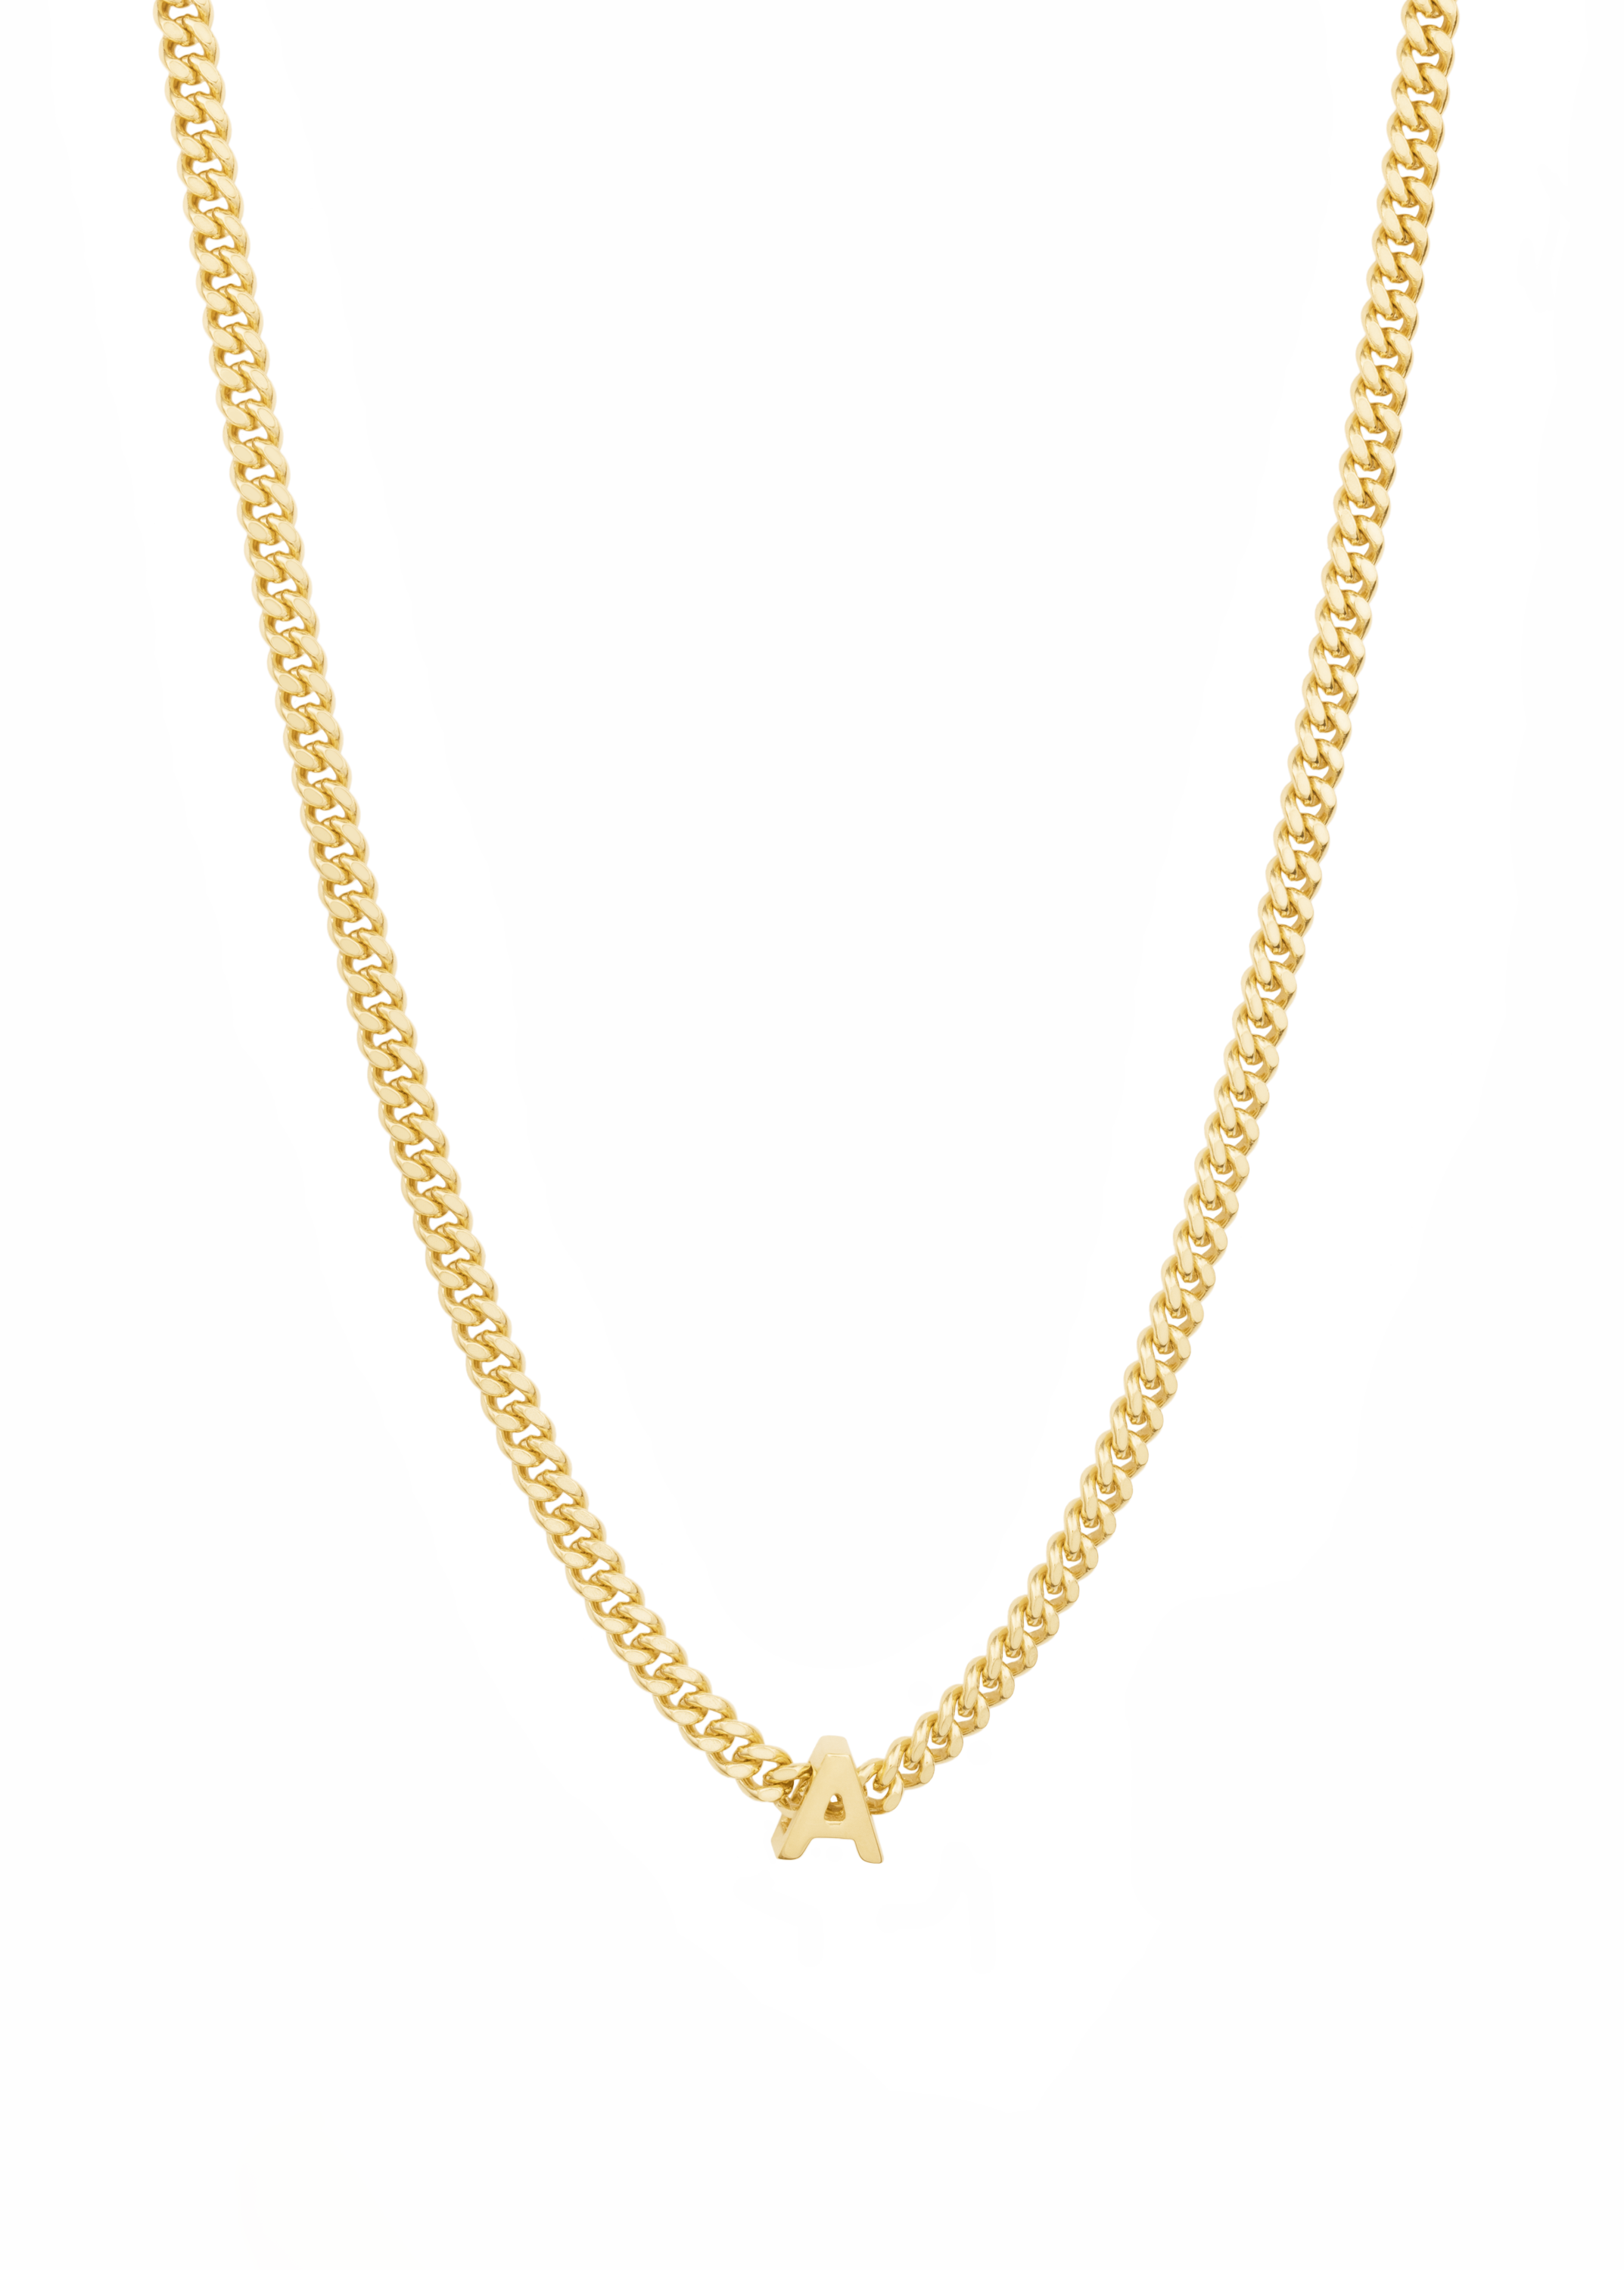 alphabet necklace with pendant A